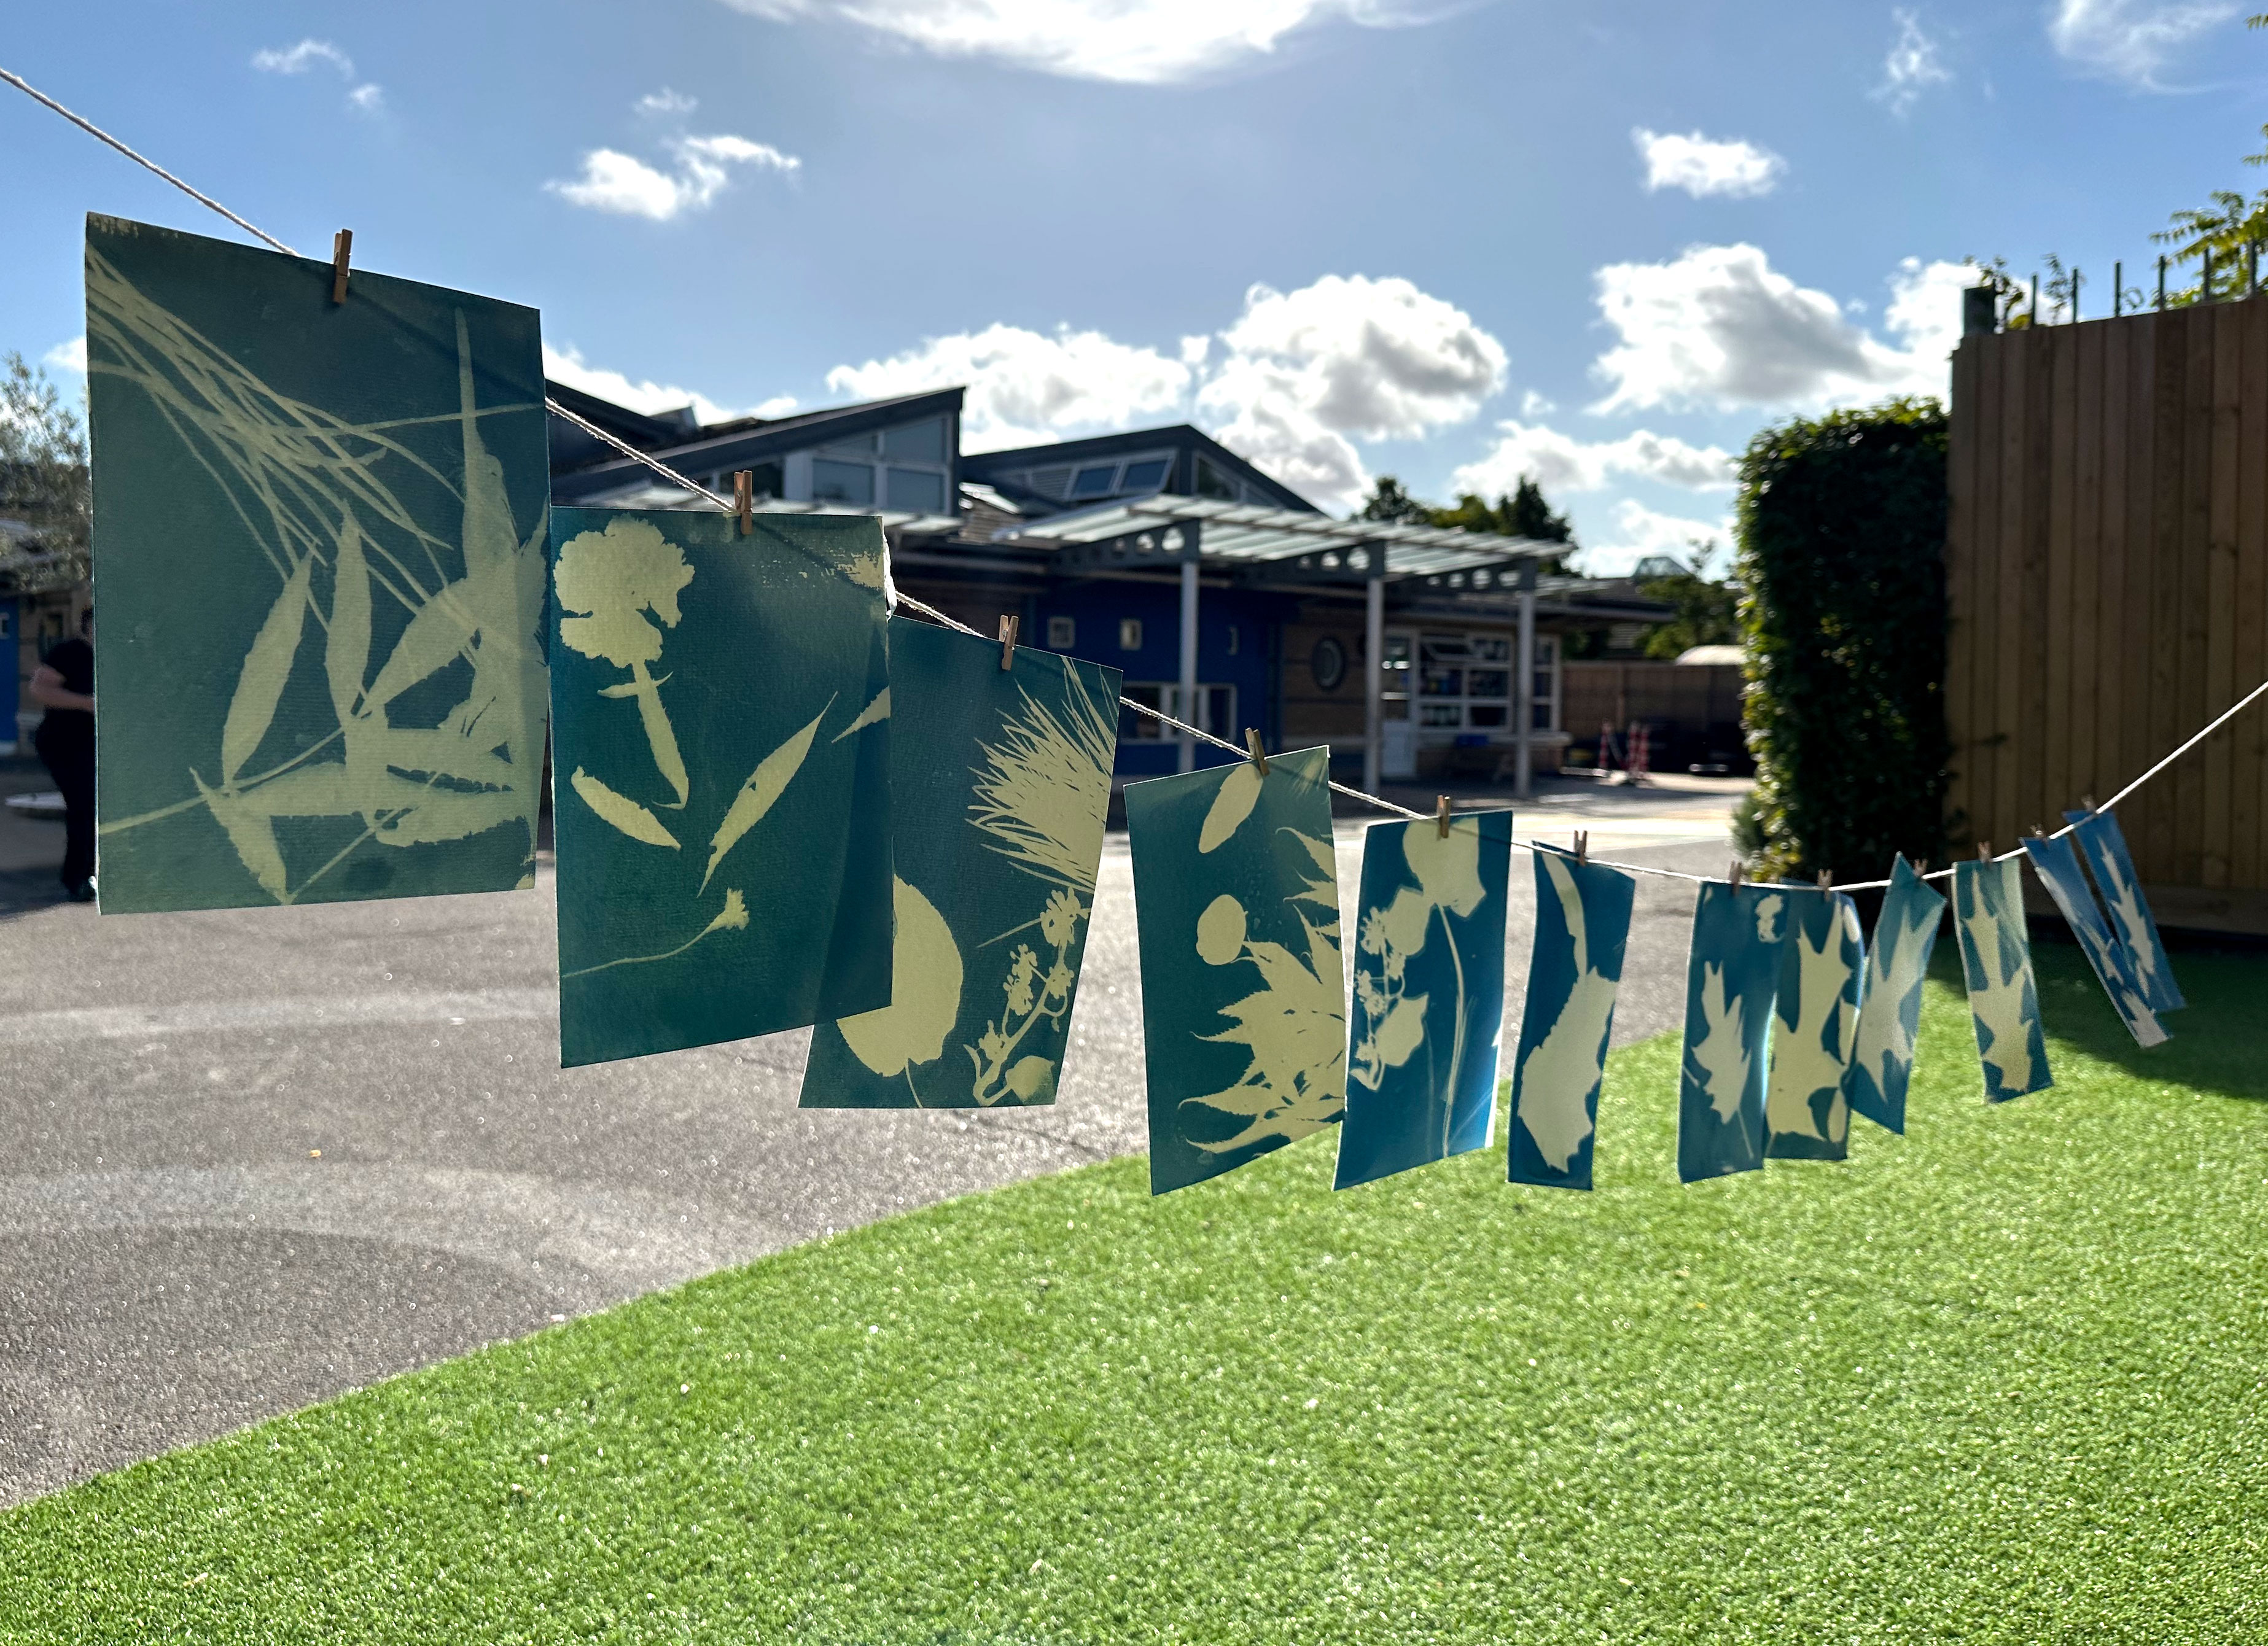 Cyanotype prints, Gallions Primary School, Newham